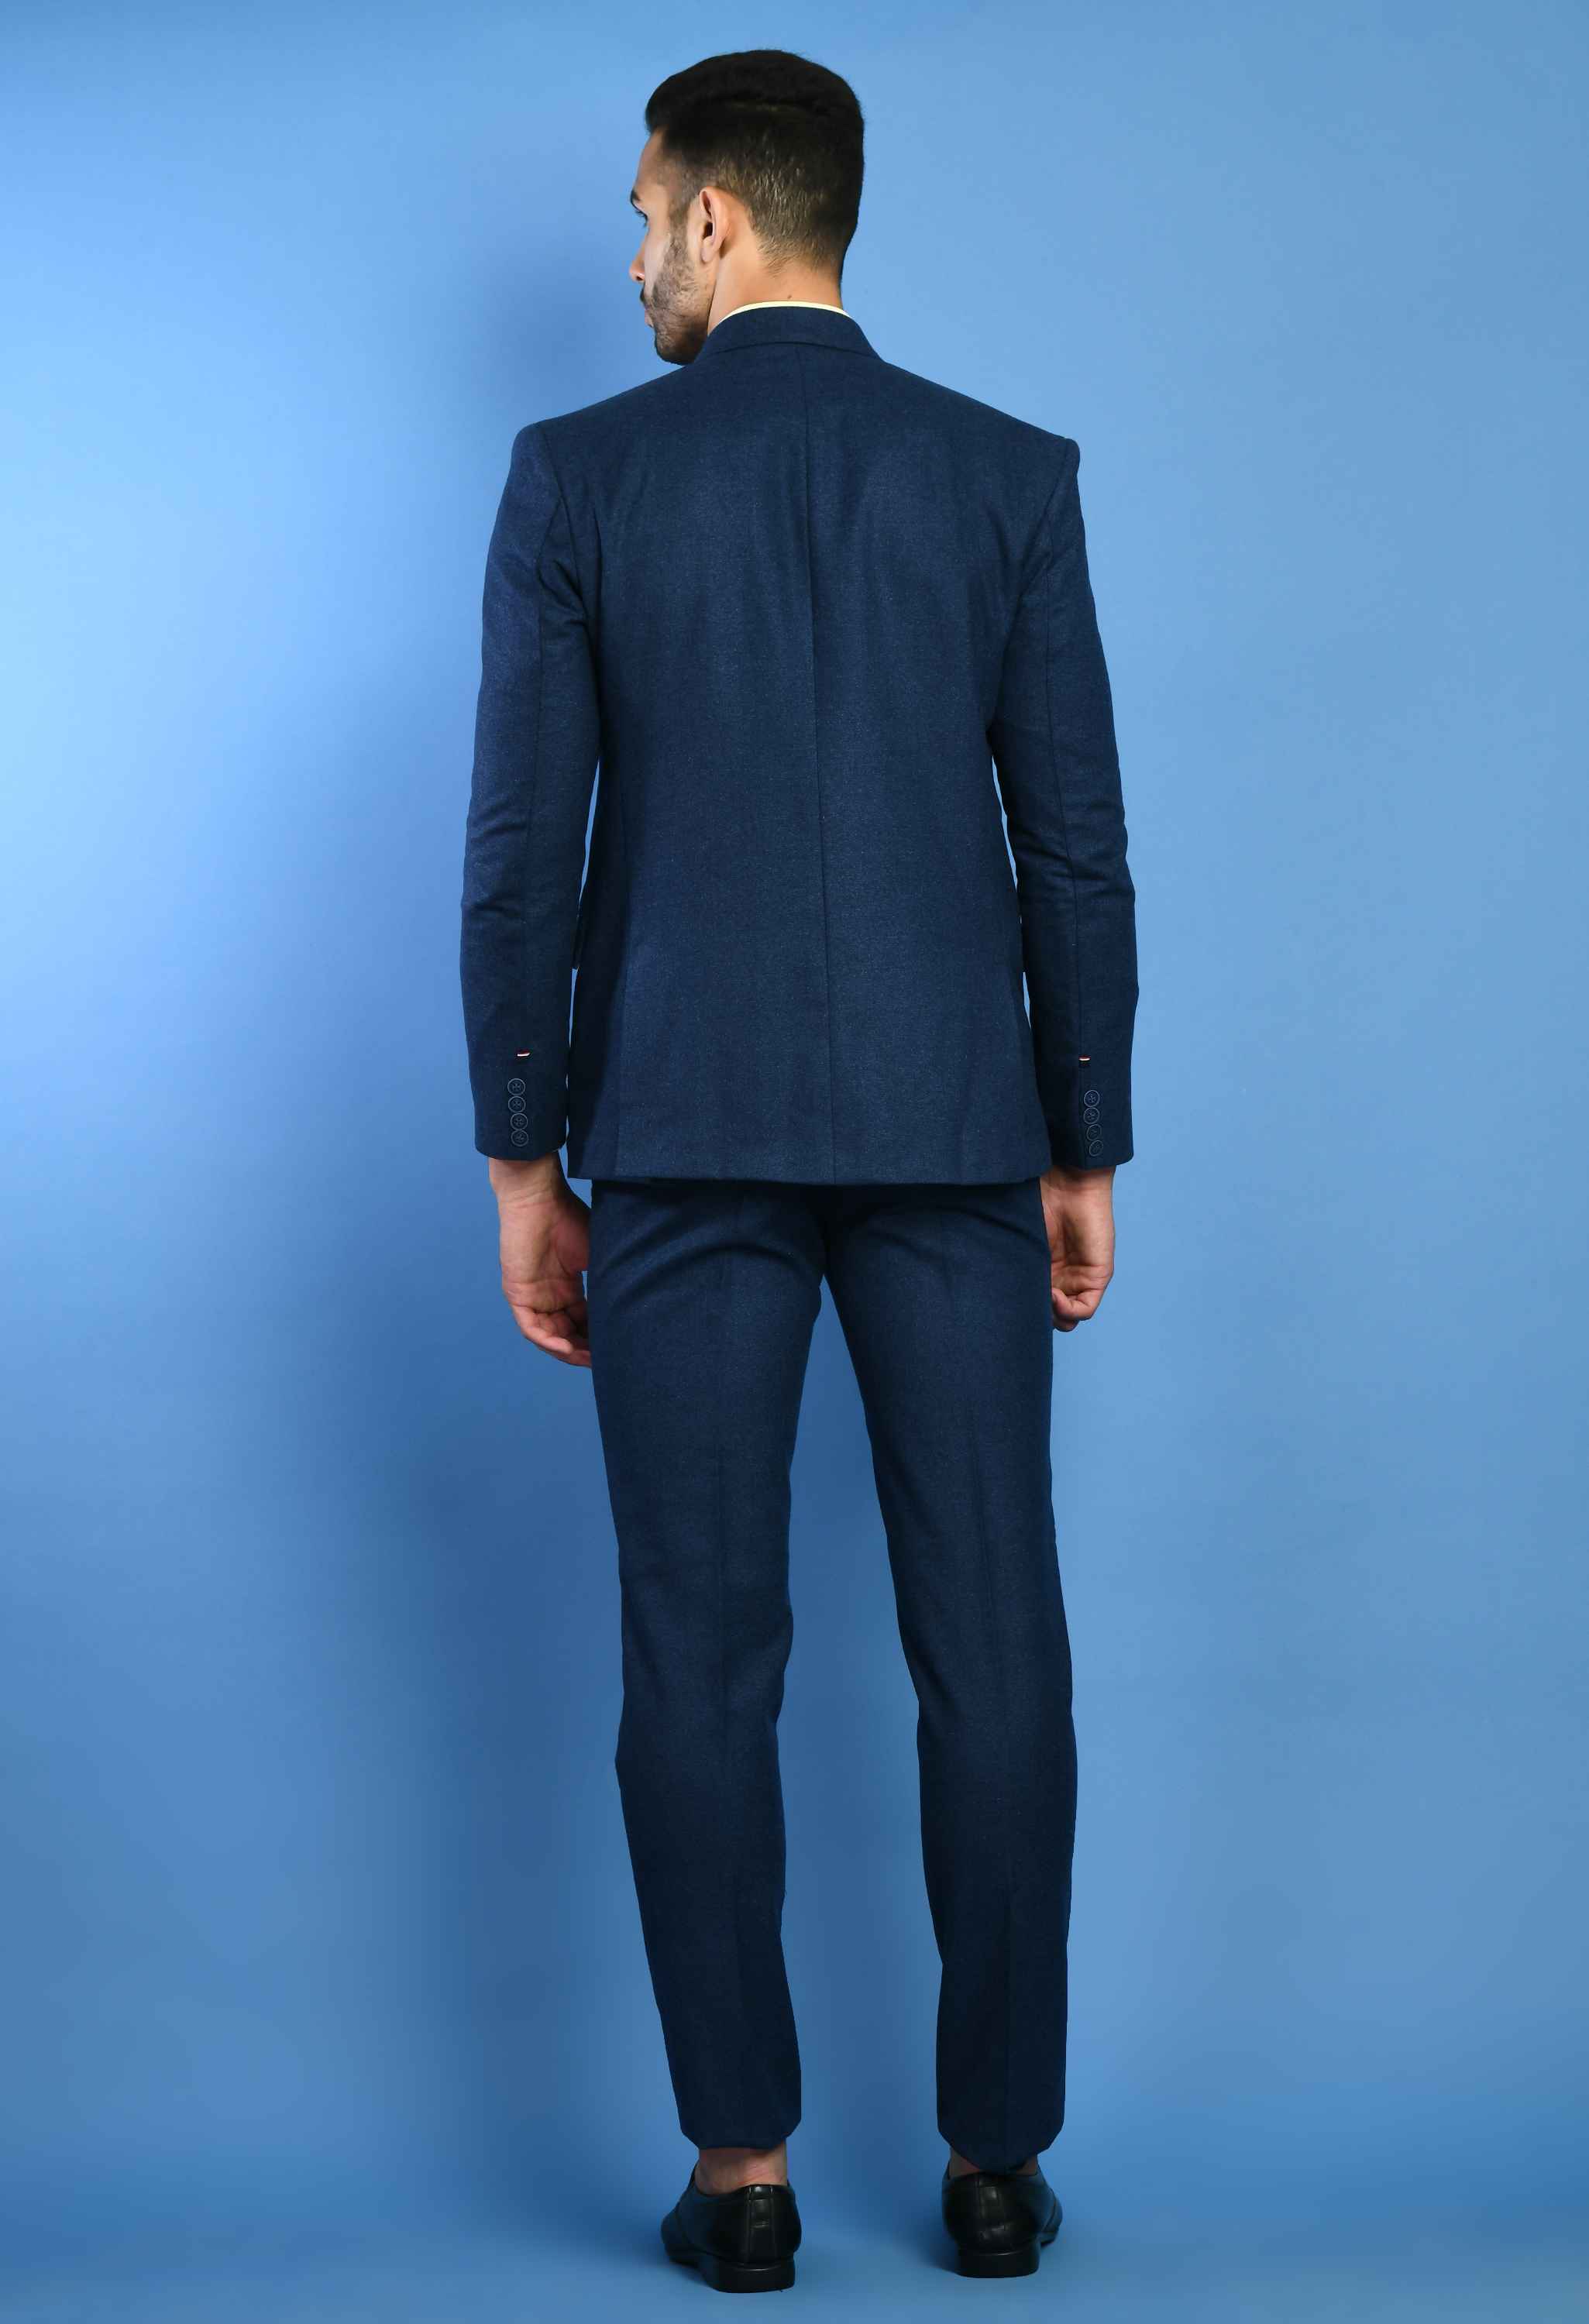 Men's Charming Navy Blue Suit Set - SQUIREHOOD